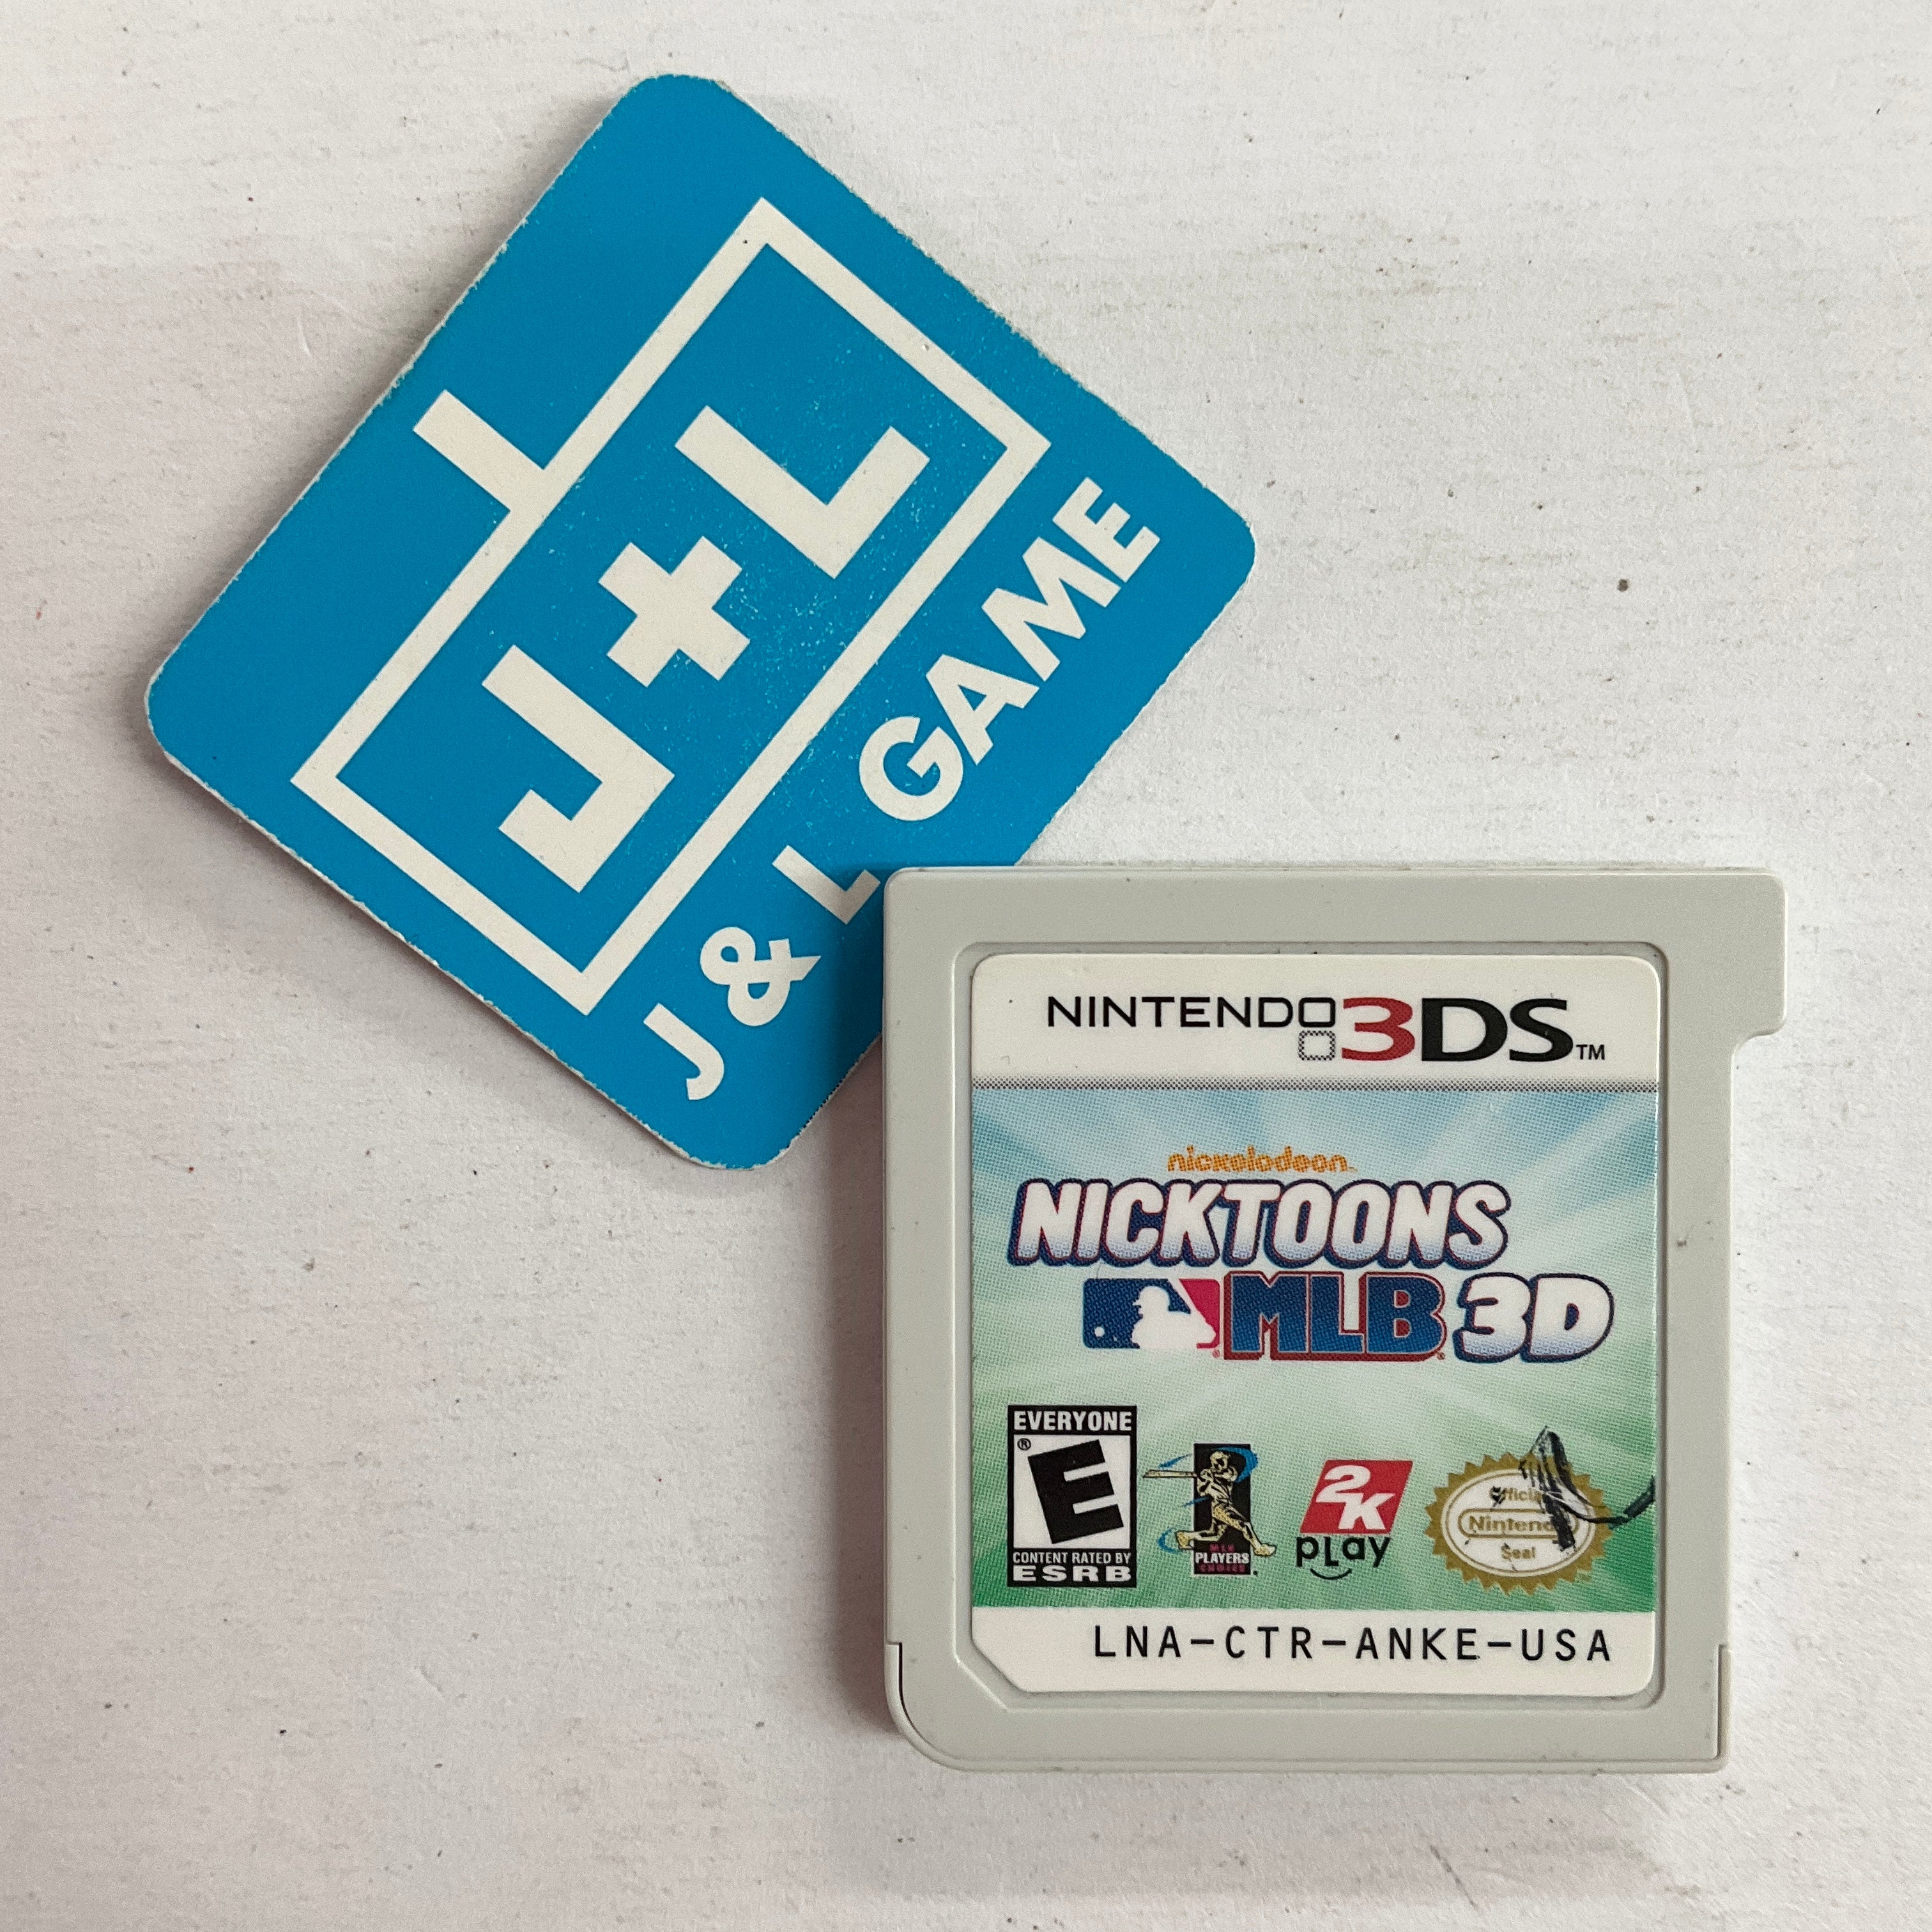 Nicktoons MLB 3D - Nintendo 3DS [Pre-Owned] Video Games 2K Games   